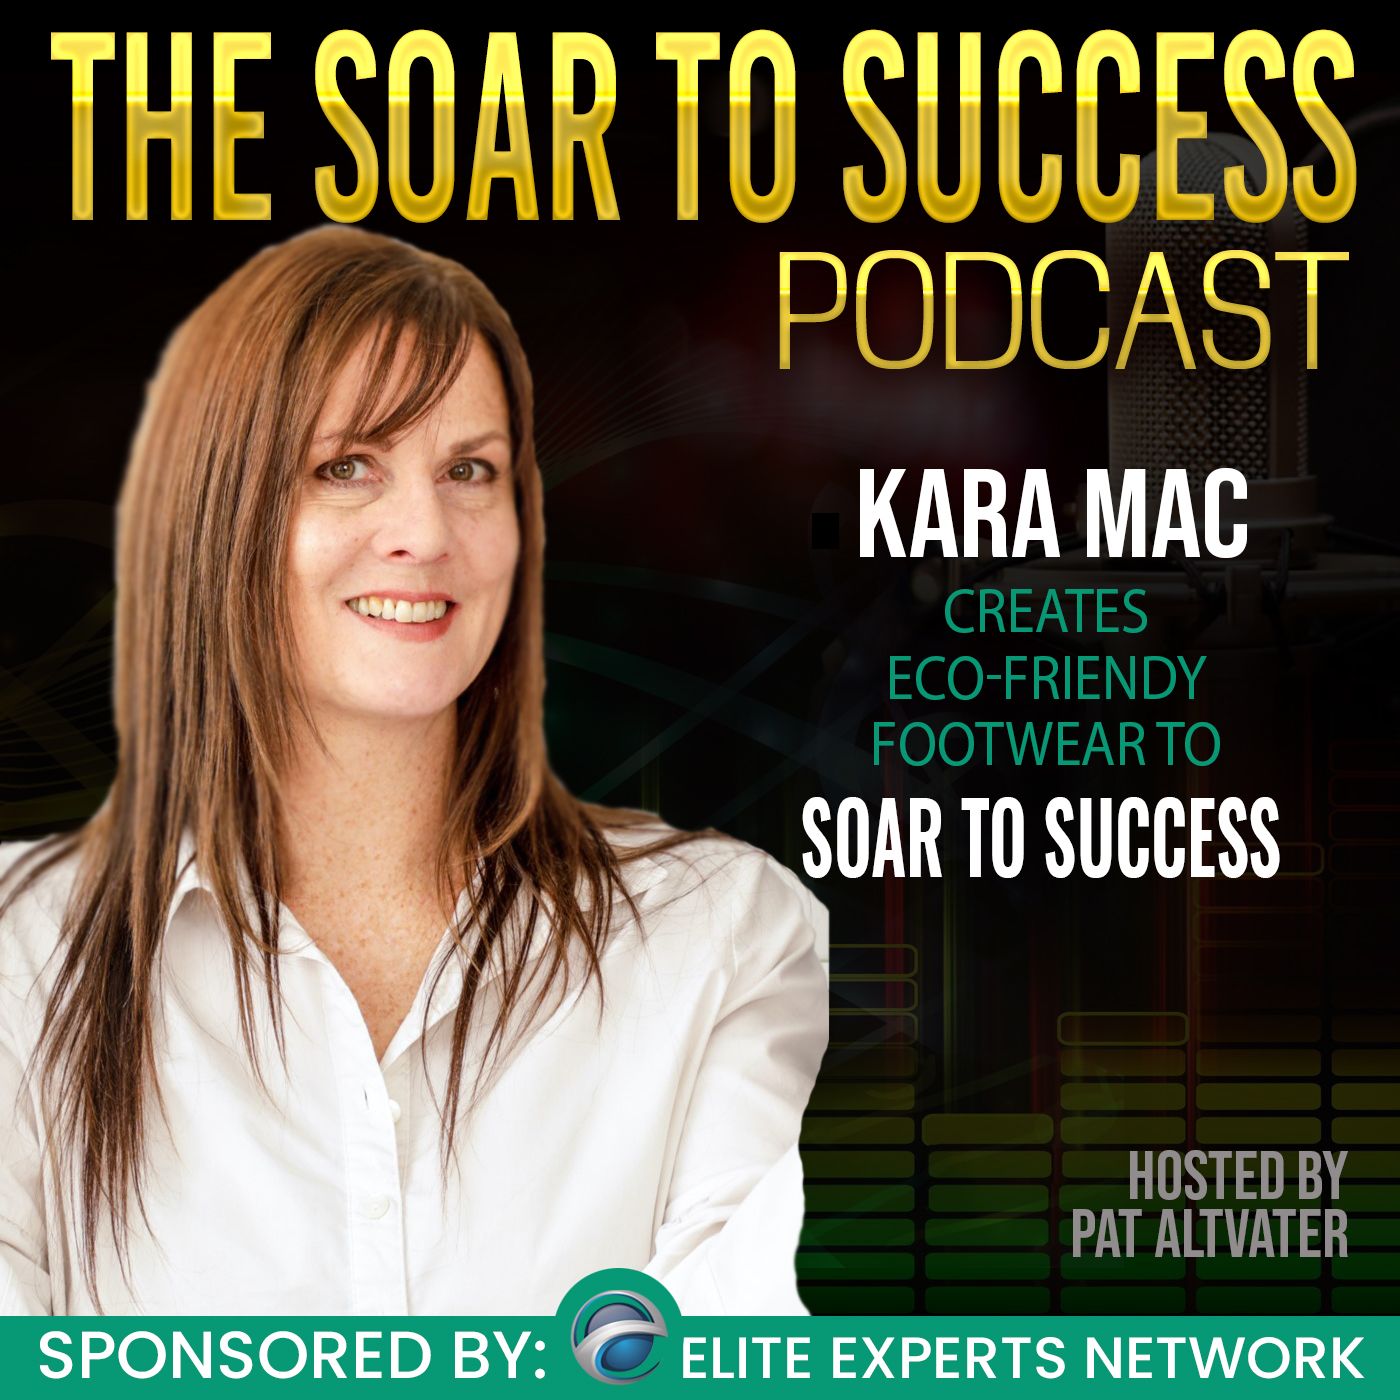 Kara Mac Creates Eco-Friendly Footwear to Soar to Success